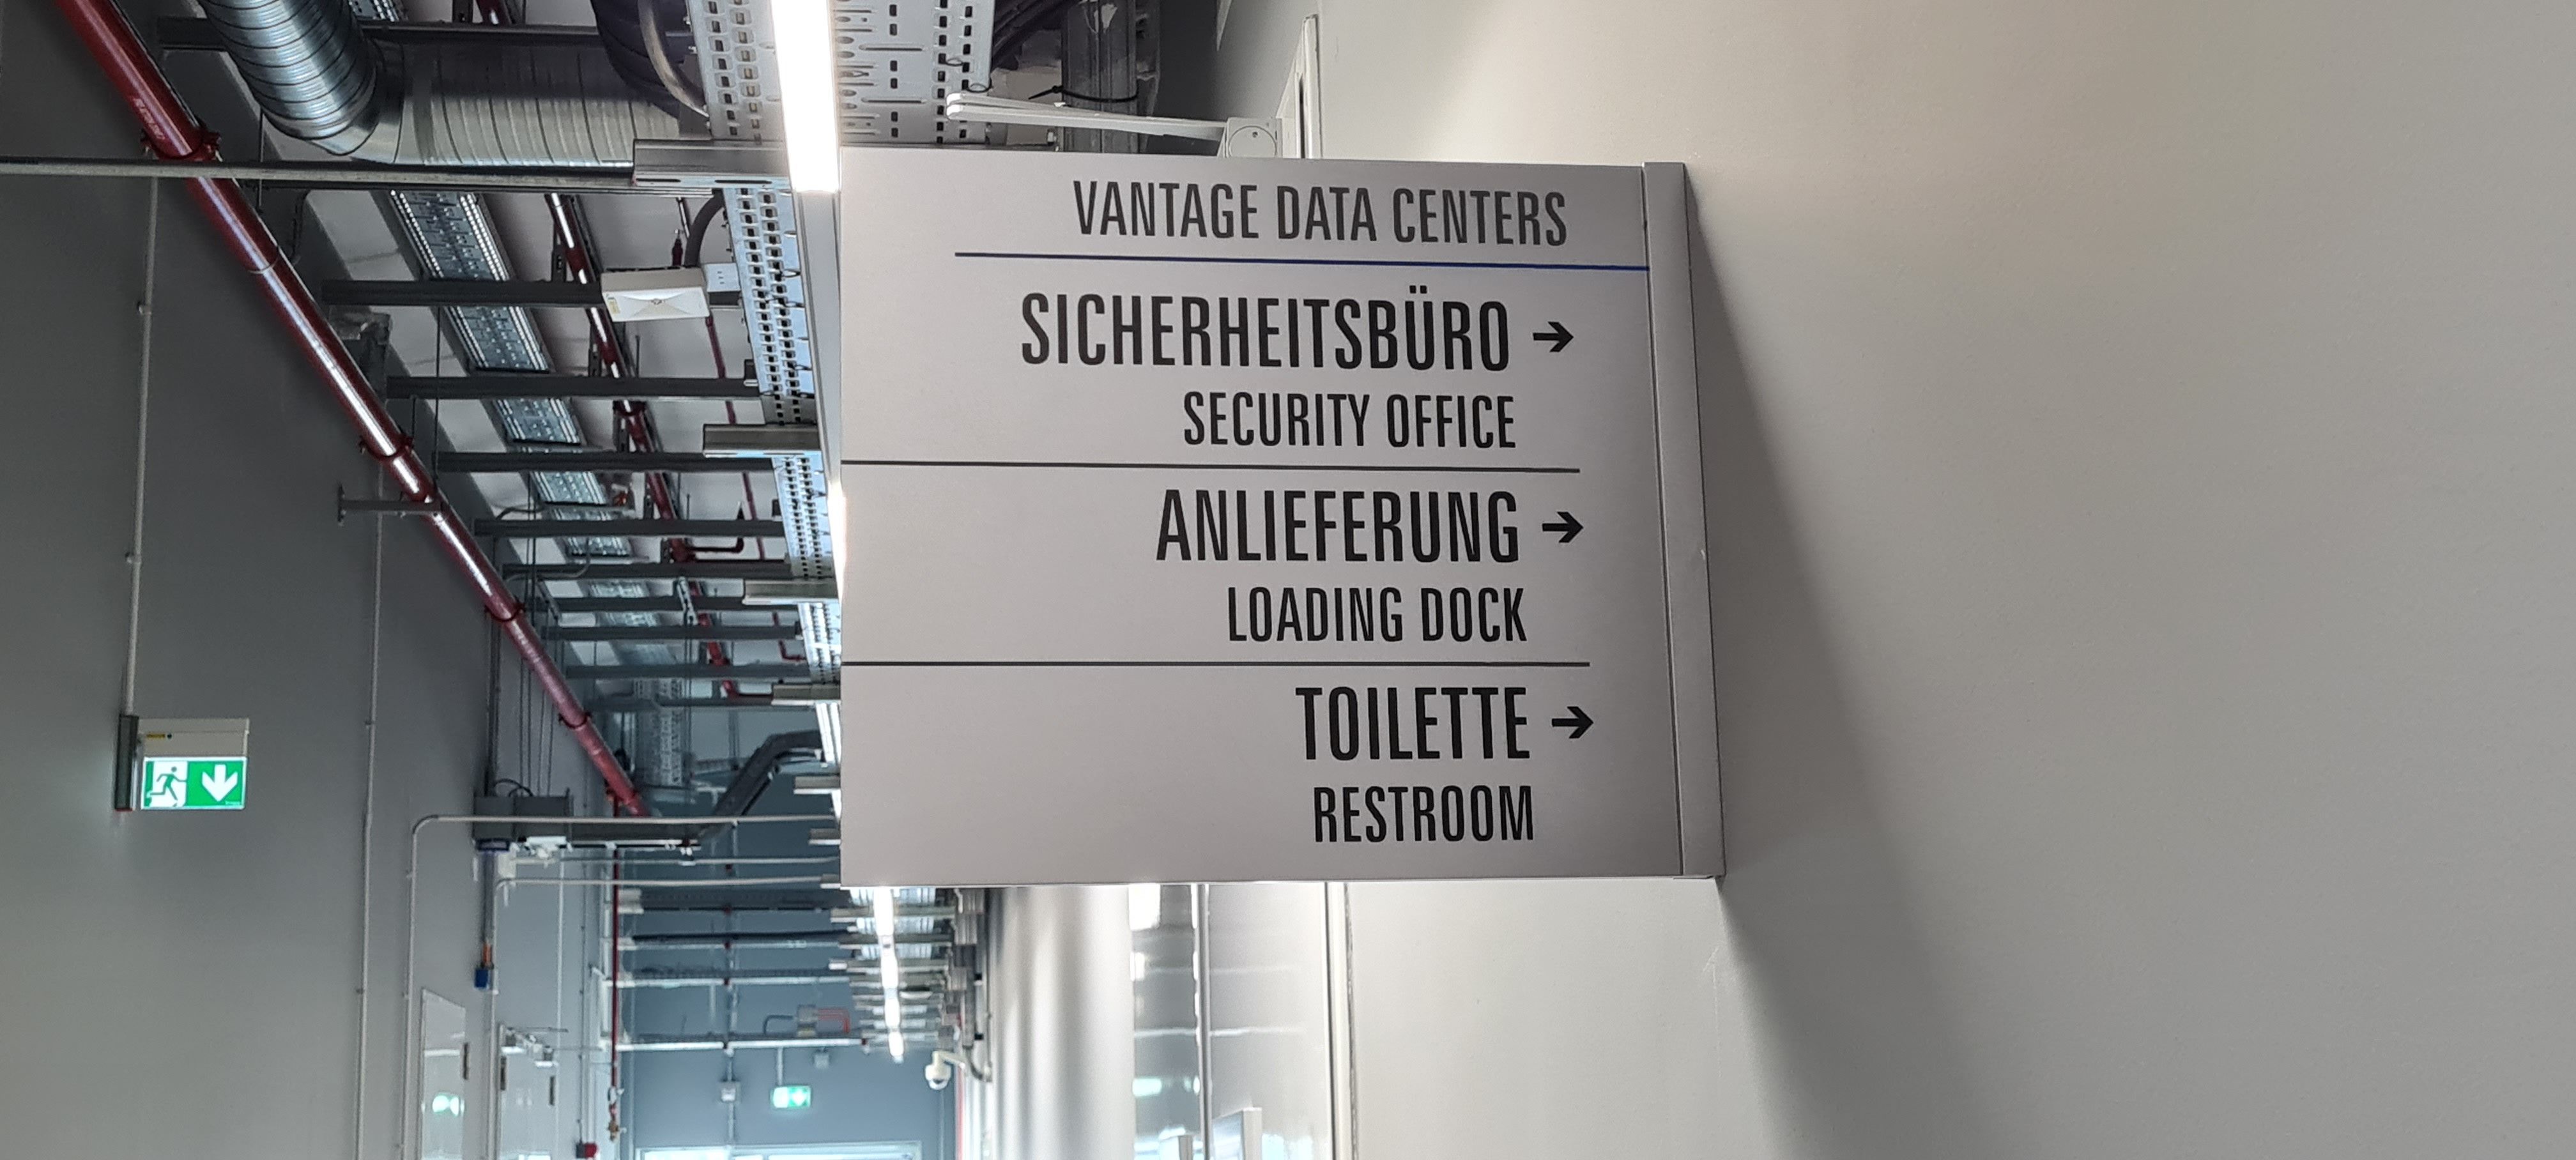 Vantage Data Centers internal wayfinding signage